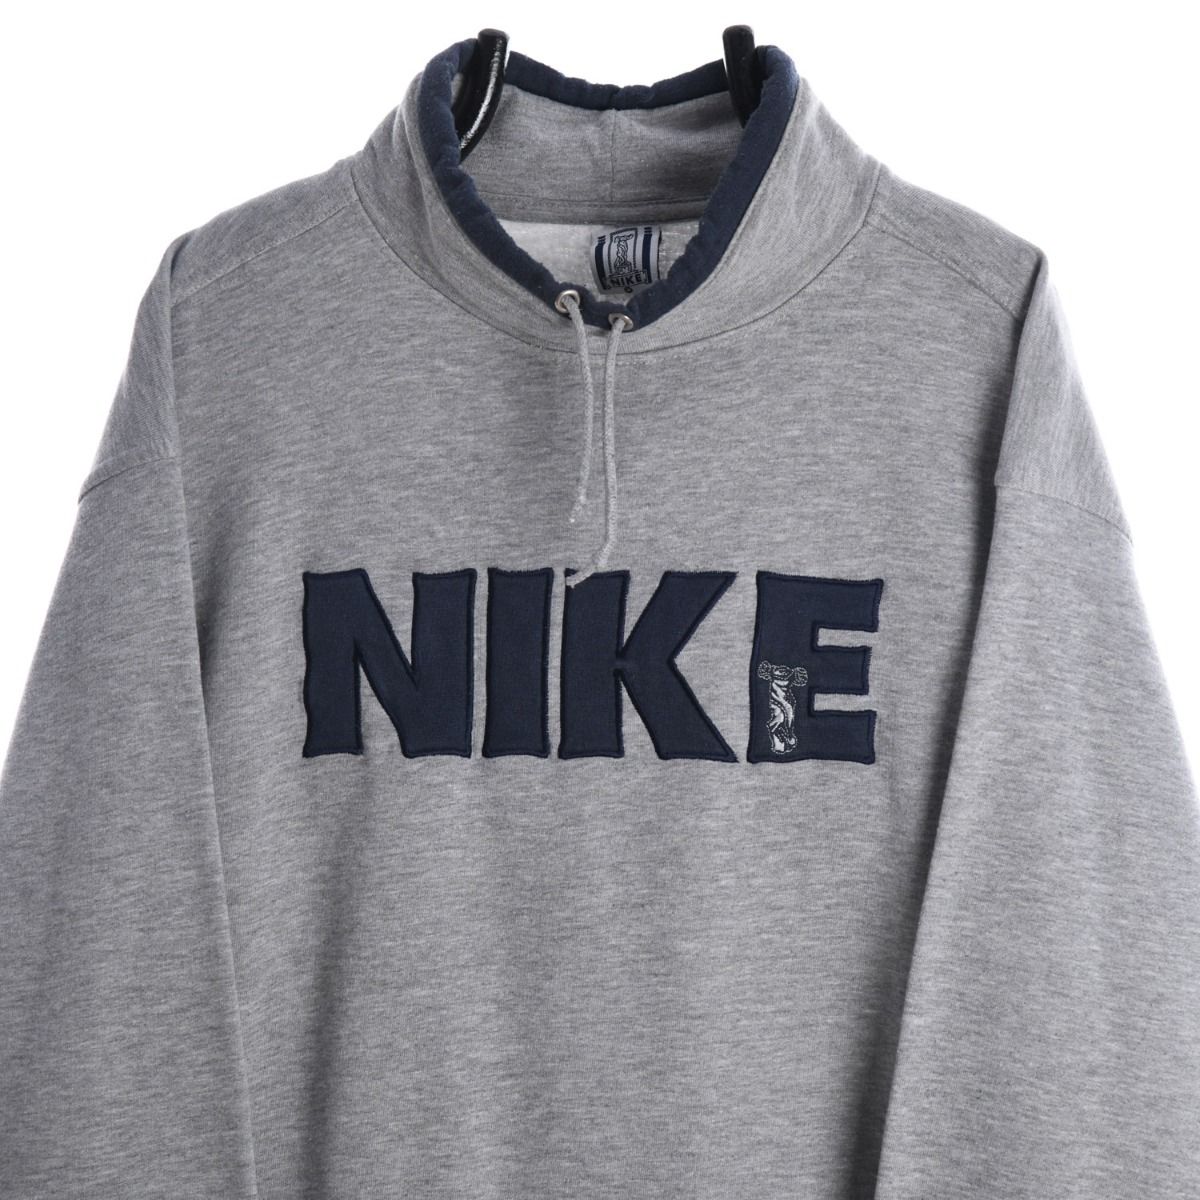 Nike (Cidesport) 1990s Sweatshirt